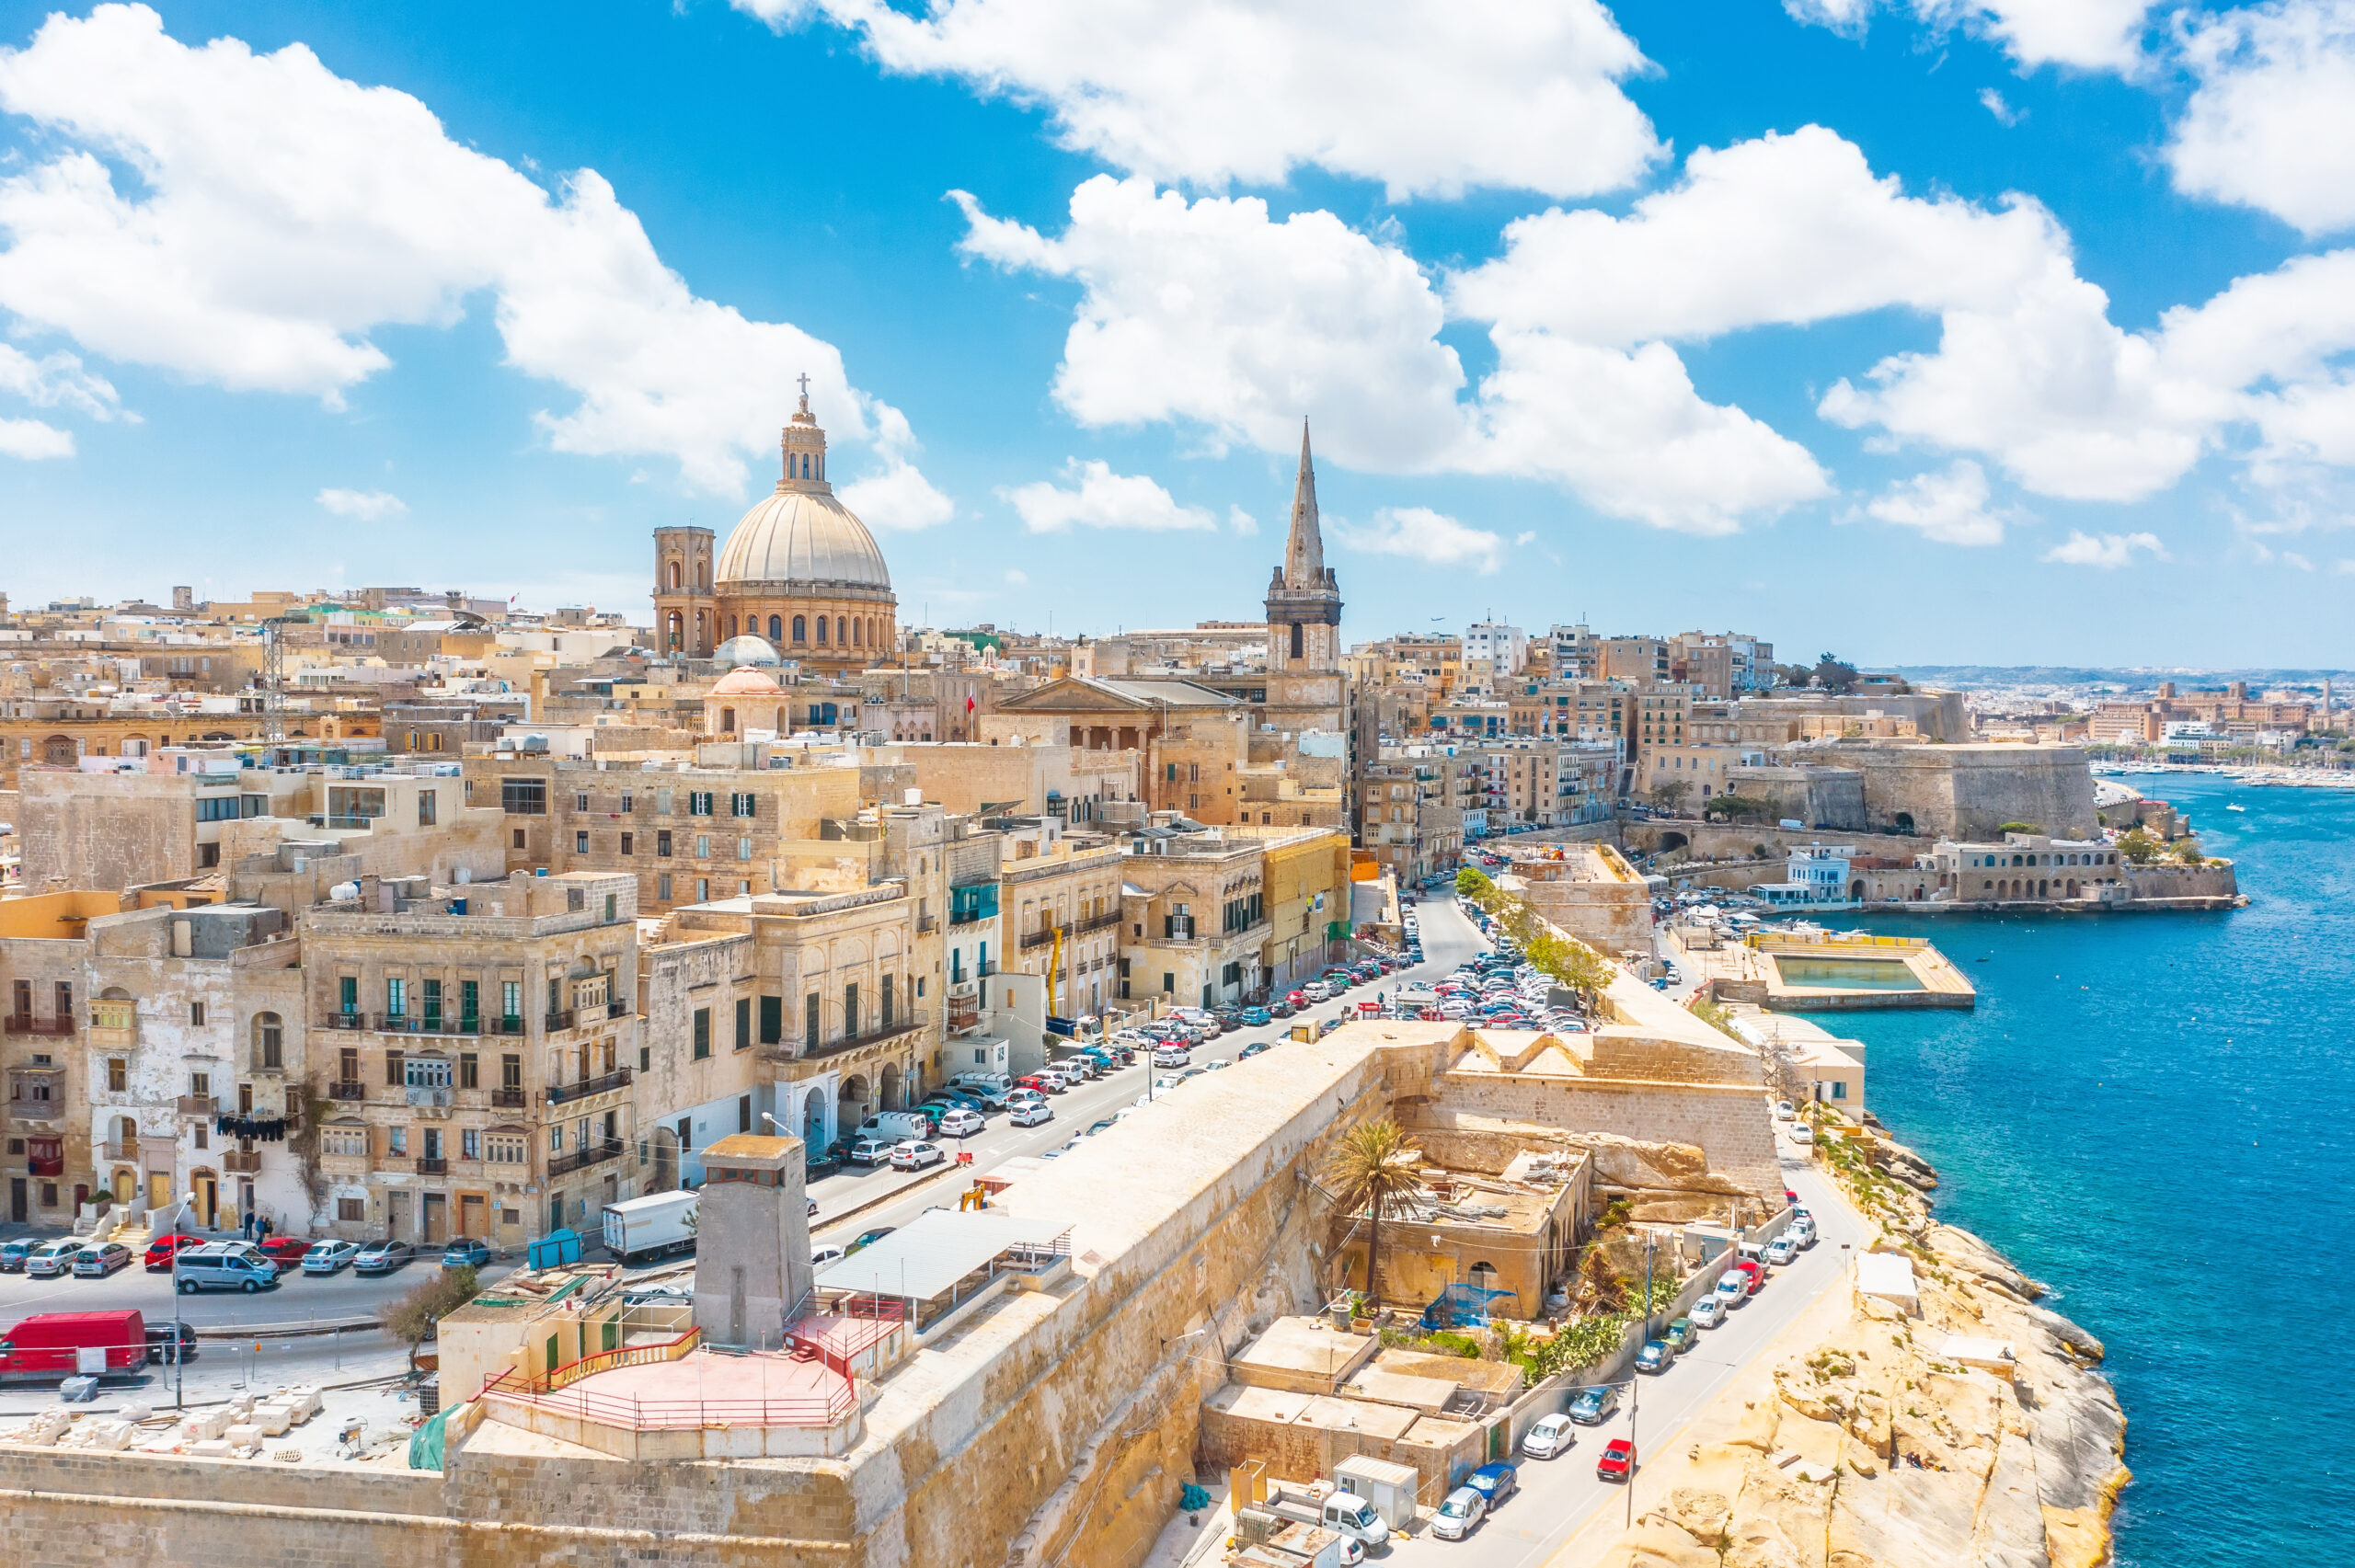 Valletta, Malta (Photo Credit: aappp / Shutterstock)